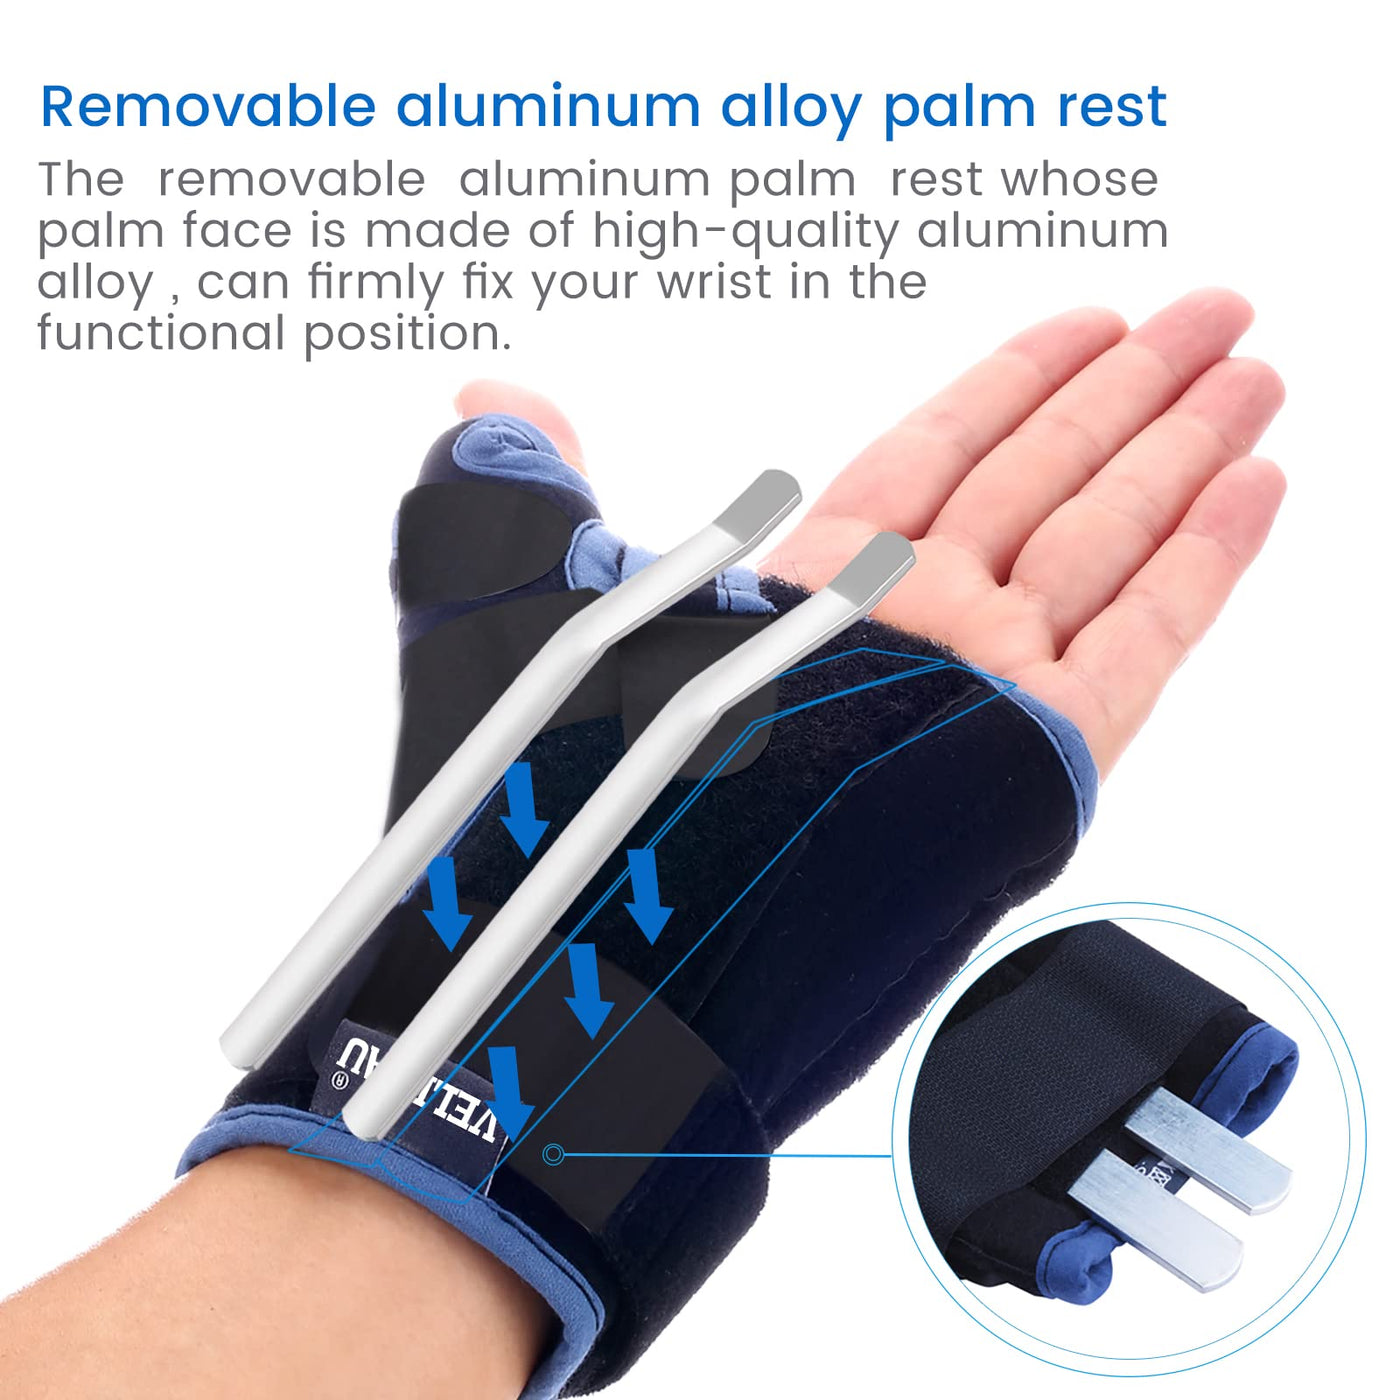  Velpeau Wrist Brace with Thumb Spica Splint for De Quervain's  Tenosynovitis, Carpal Tunnel Pain, Stabilizer for Tendonitis, Arthritis,  Sprains & Fracture Forearm Support Cast (Regular, Left Hand -L) : Health 